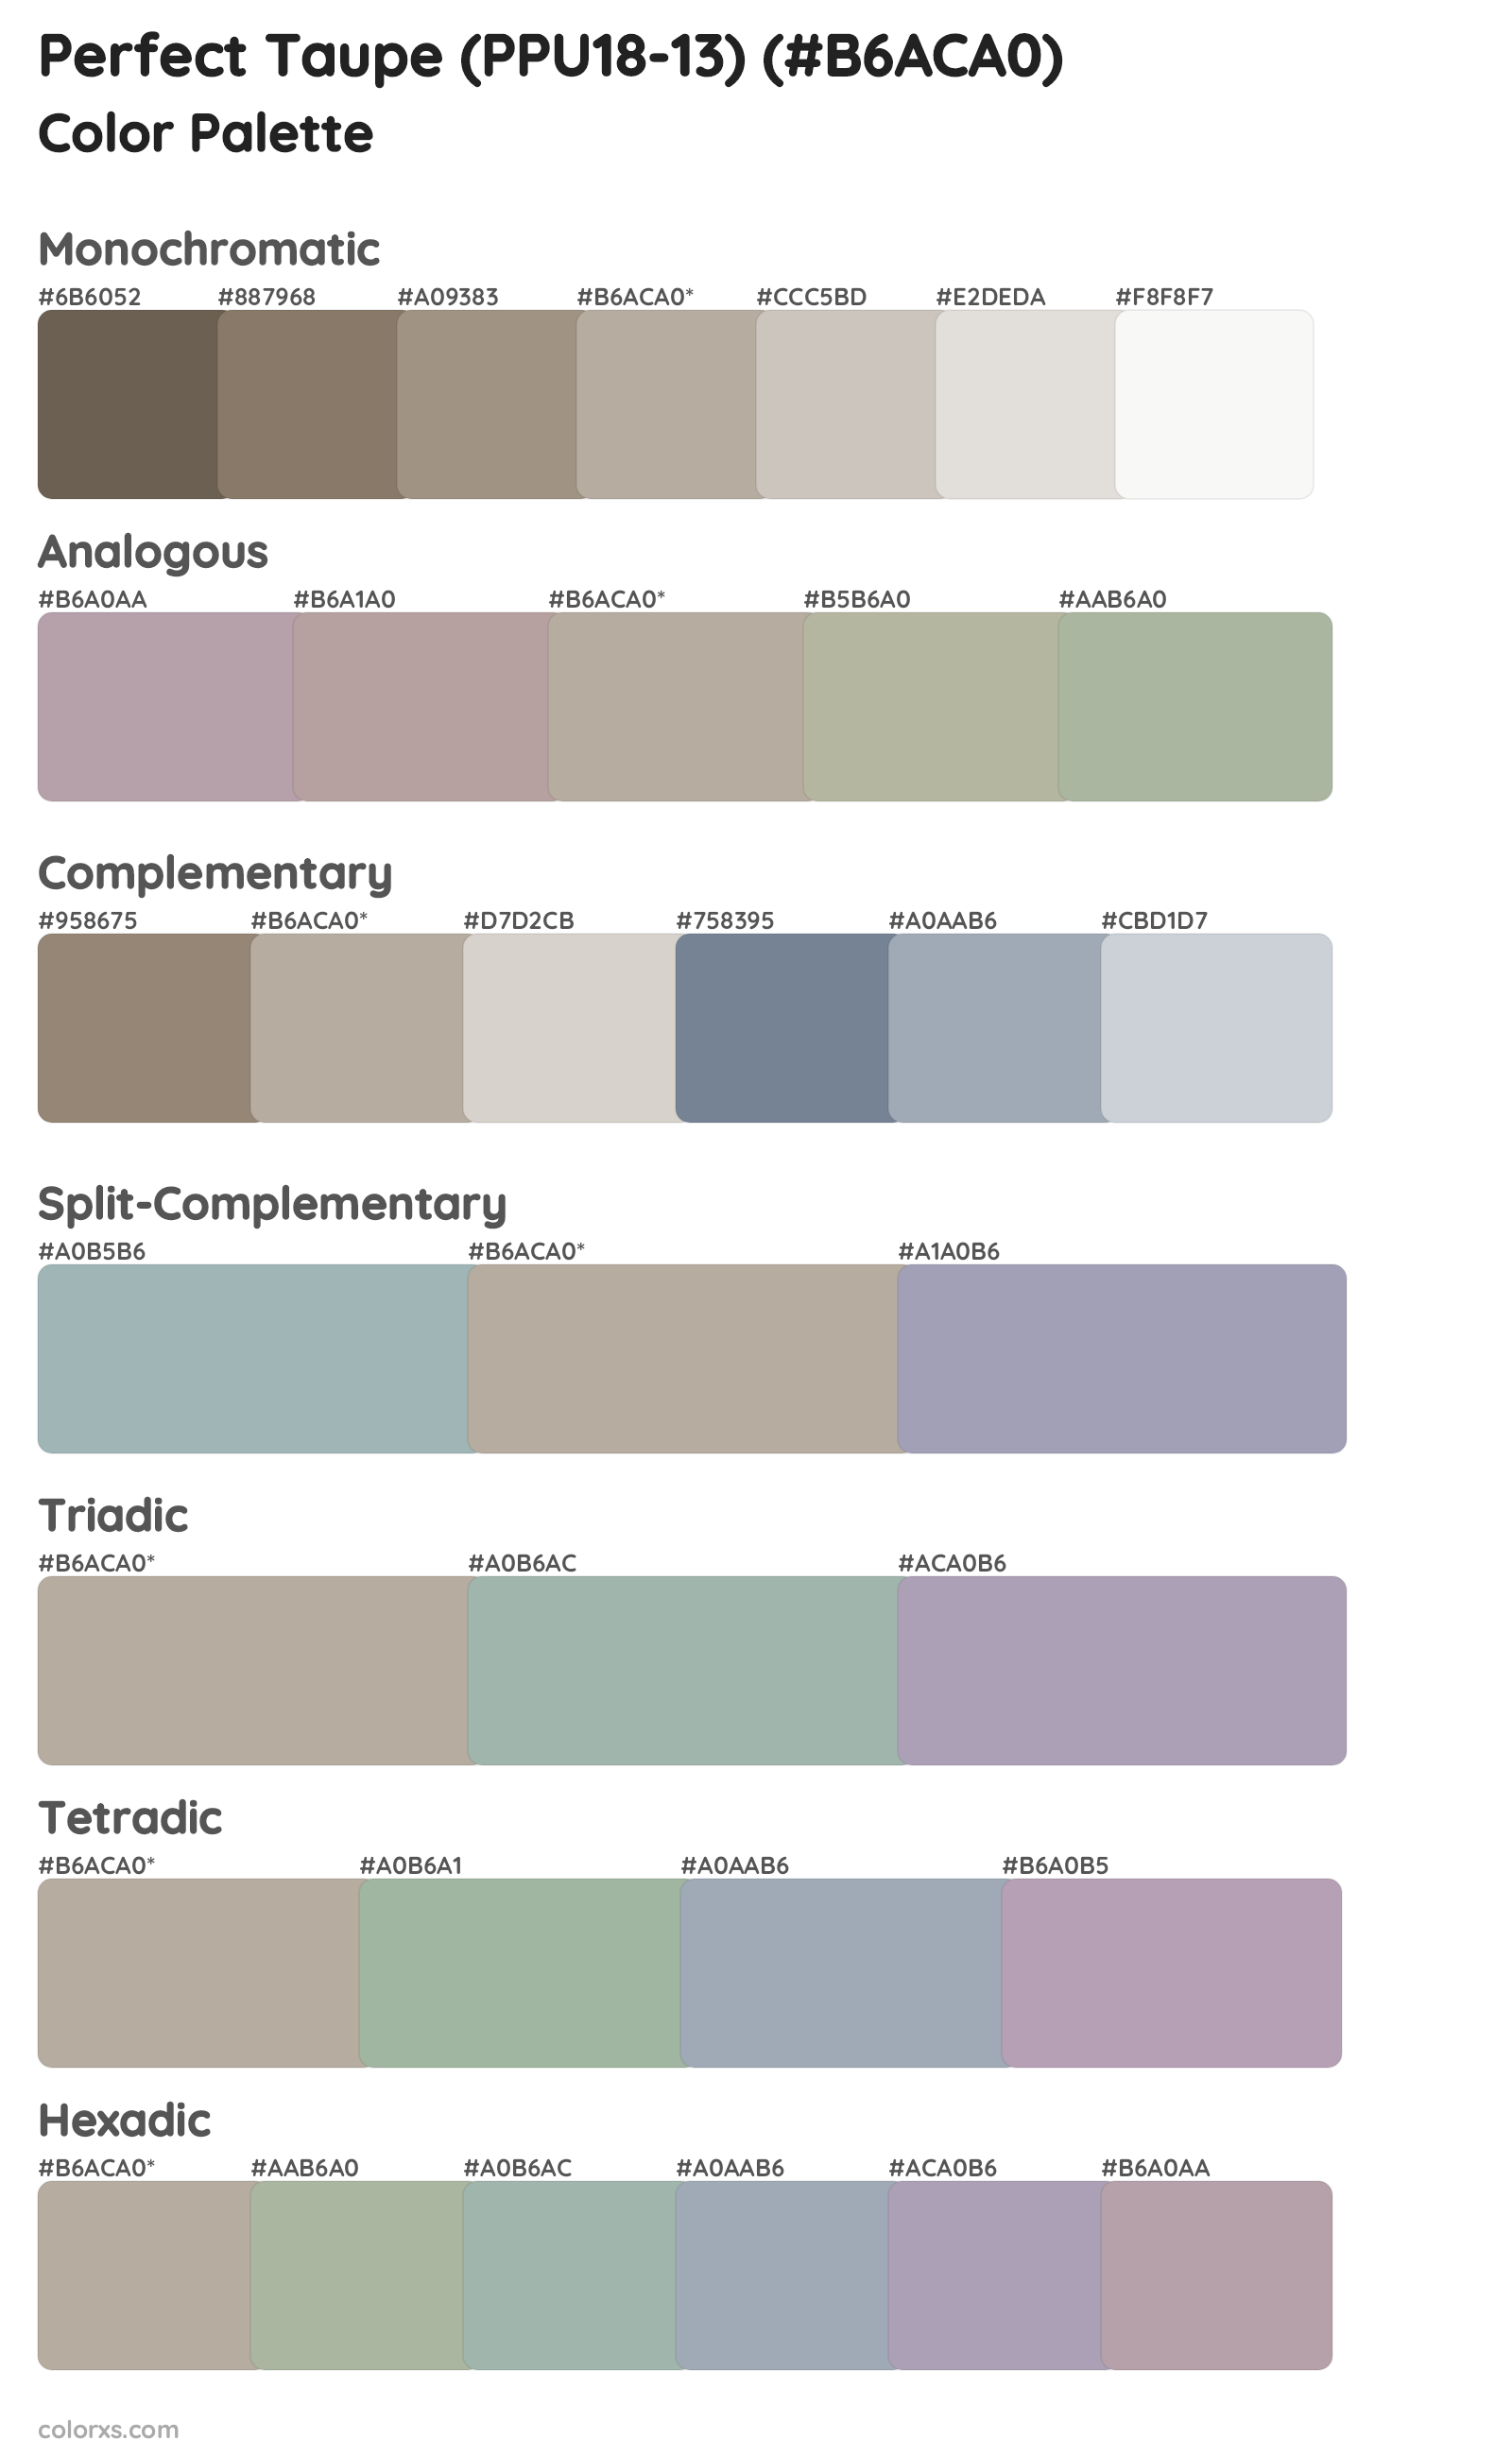 Perfect Taupe (PPU18-13) Color Scheme Palettes